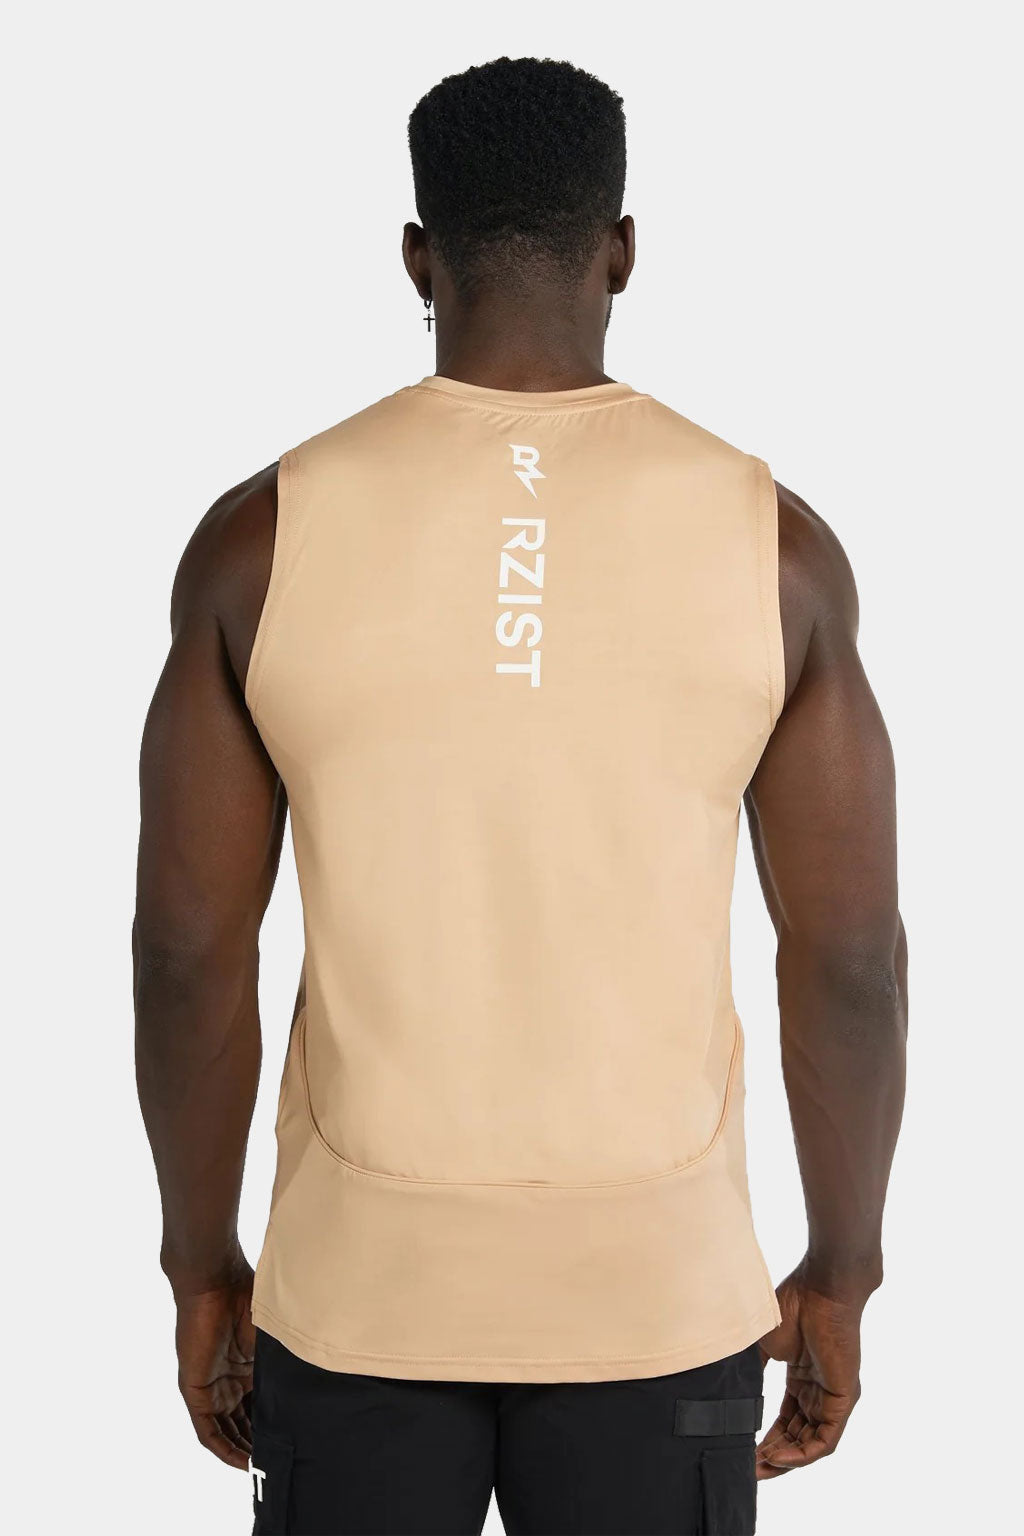 Rzist - Sleeveless Performance Shirt